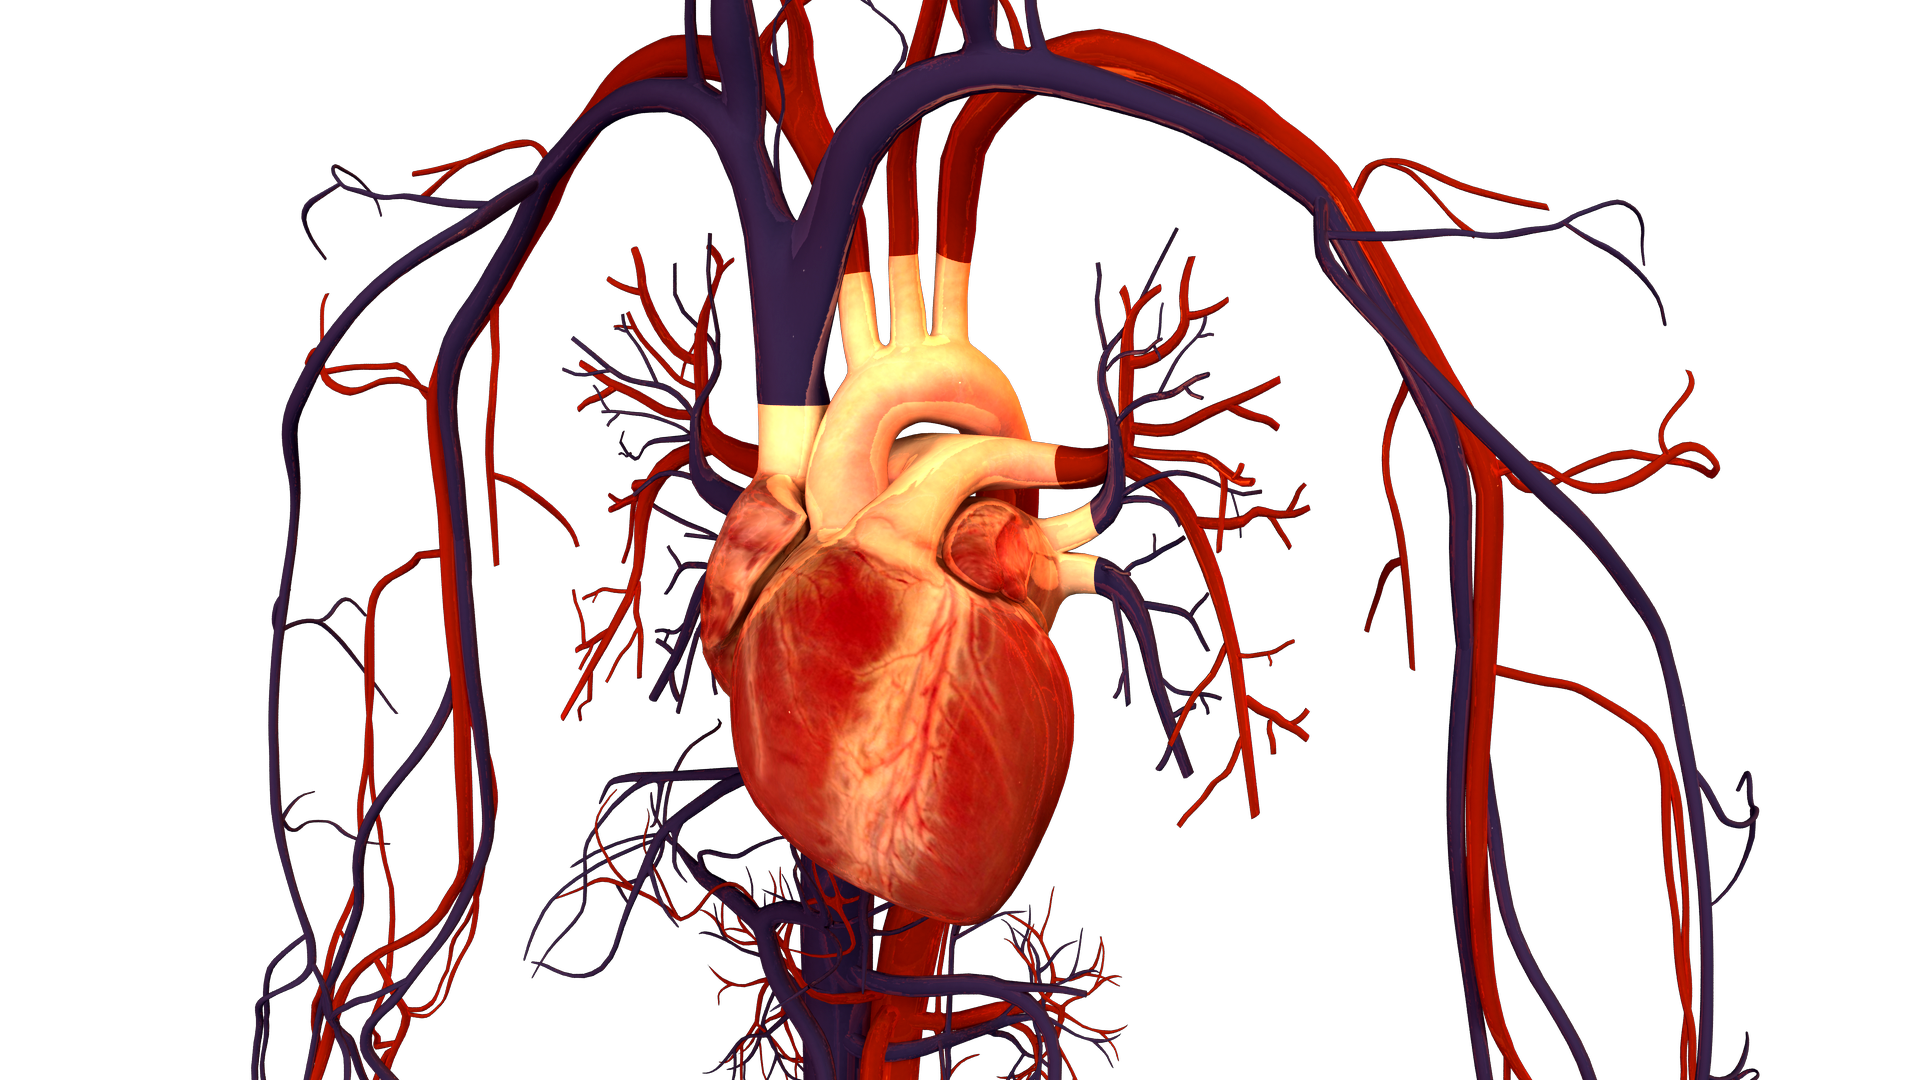 Sistema cardiovascular humano